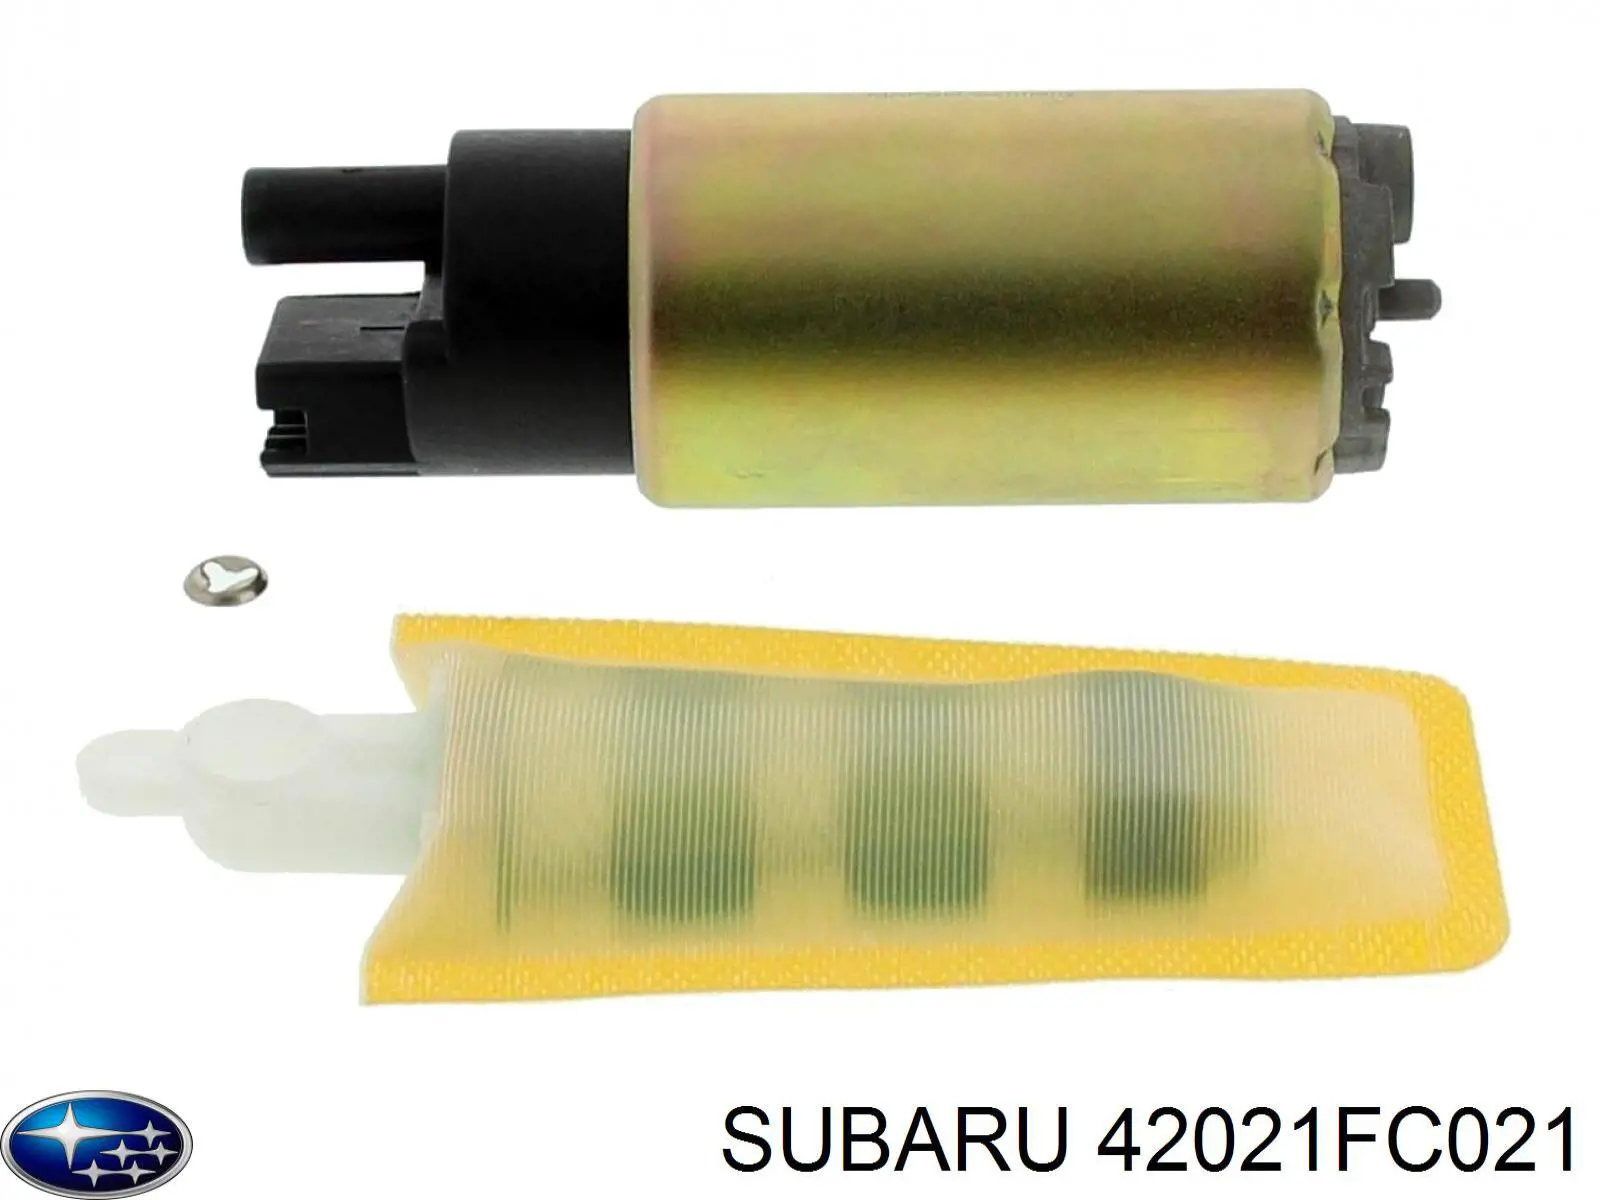 42021FC021 Subaru bomba de combustible